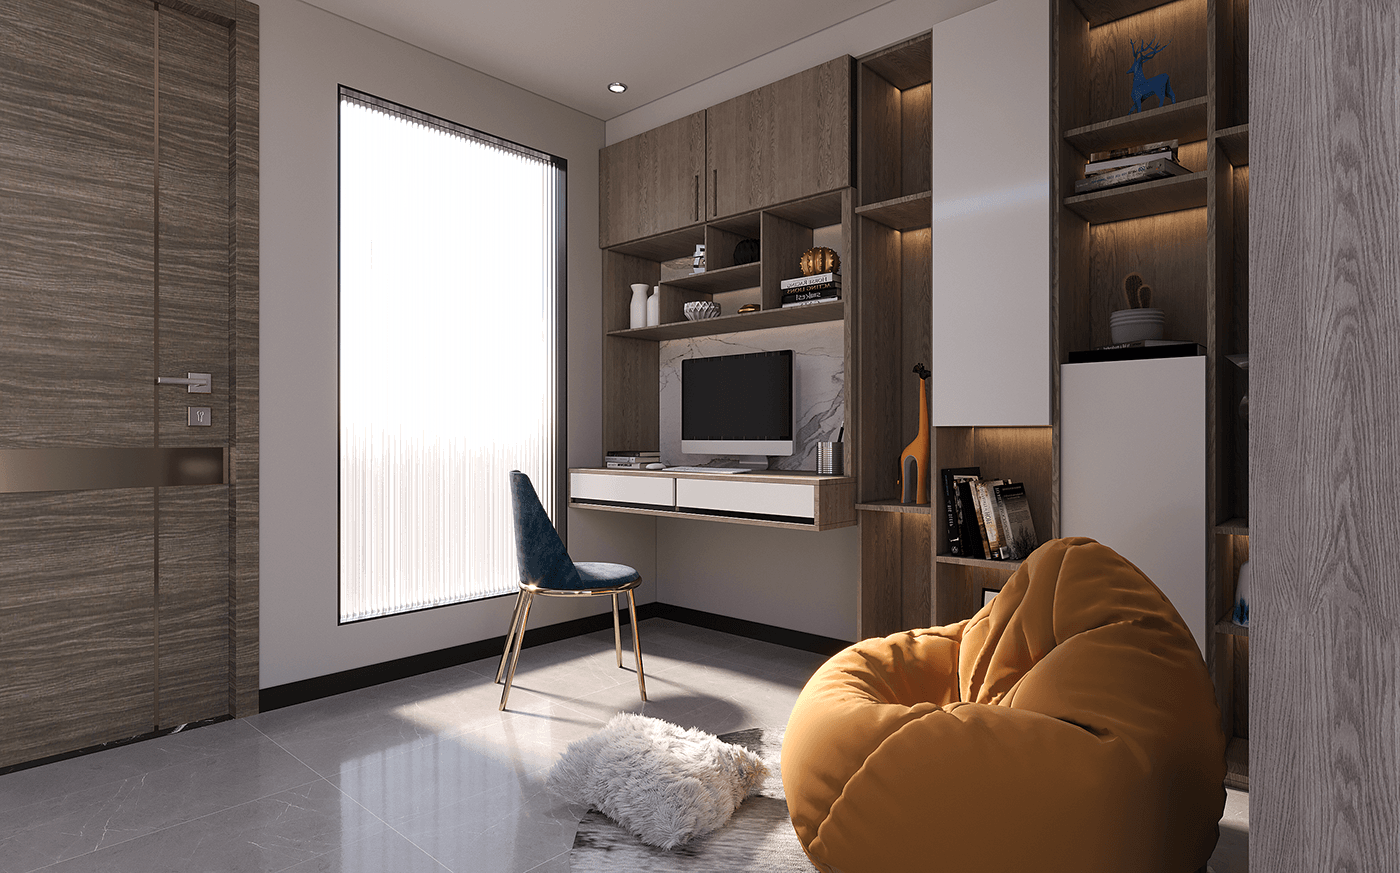 3ds max corona render  visualization architecture Render modern interior design  corona design study room